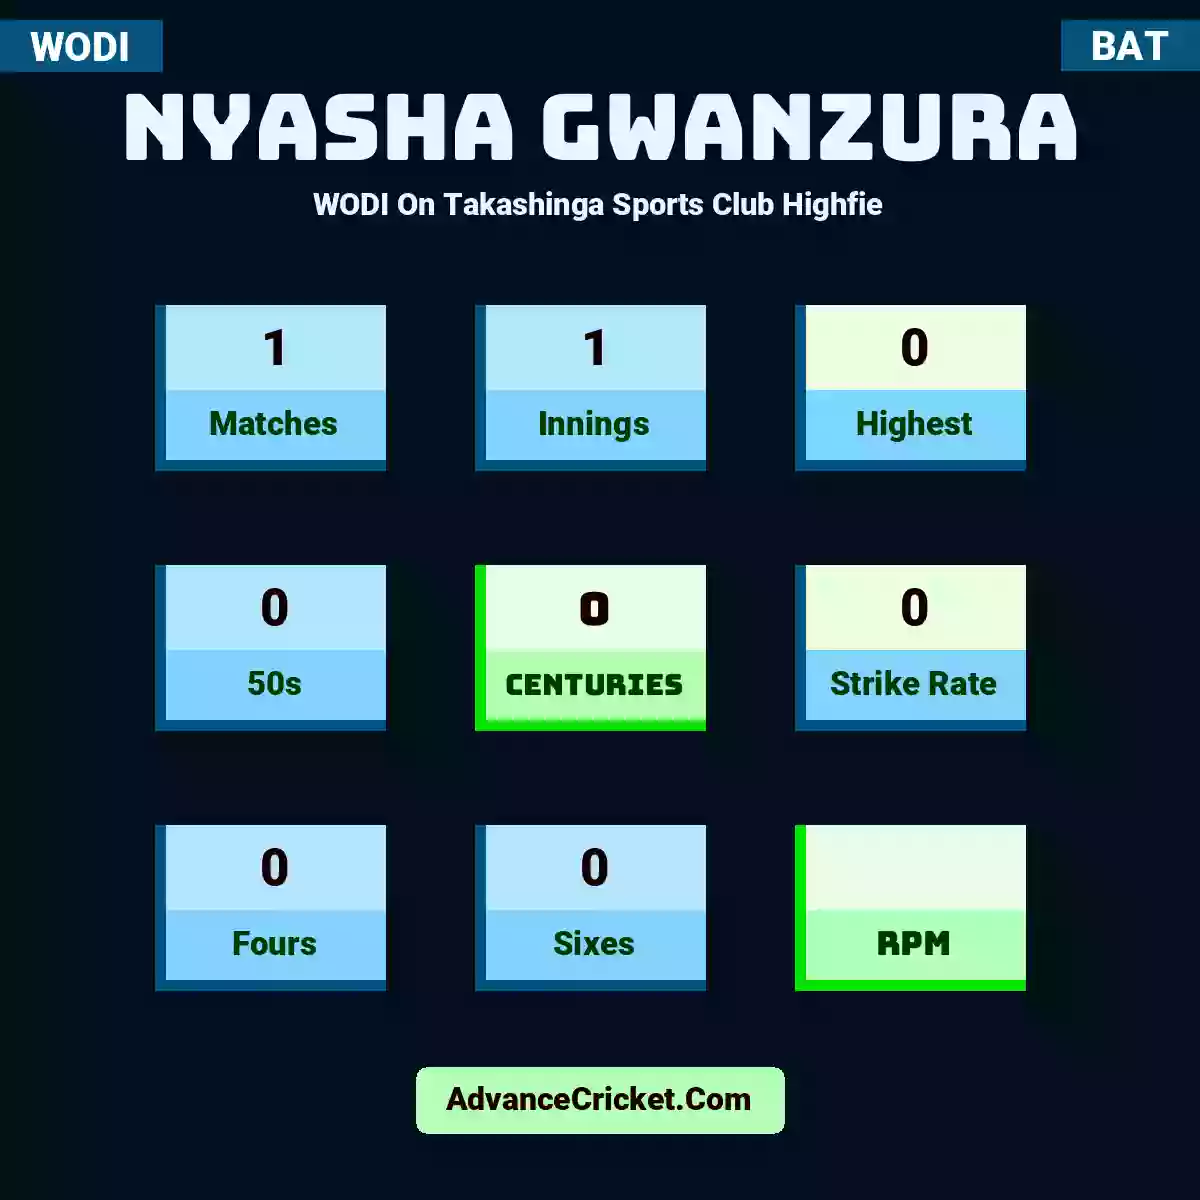 Nyasha Gwanzura WODI  On Takashinga Sports Club Highfie, Nyasha Gwanzura played 1 matches, scored 0 runs as highest, 0 half-centuries, and 0 centuries, with a strike rate of 0. N.Gwanzura hit 0 fours and 0 sixes.